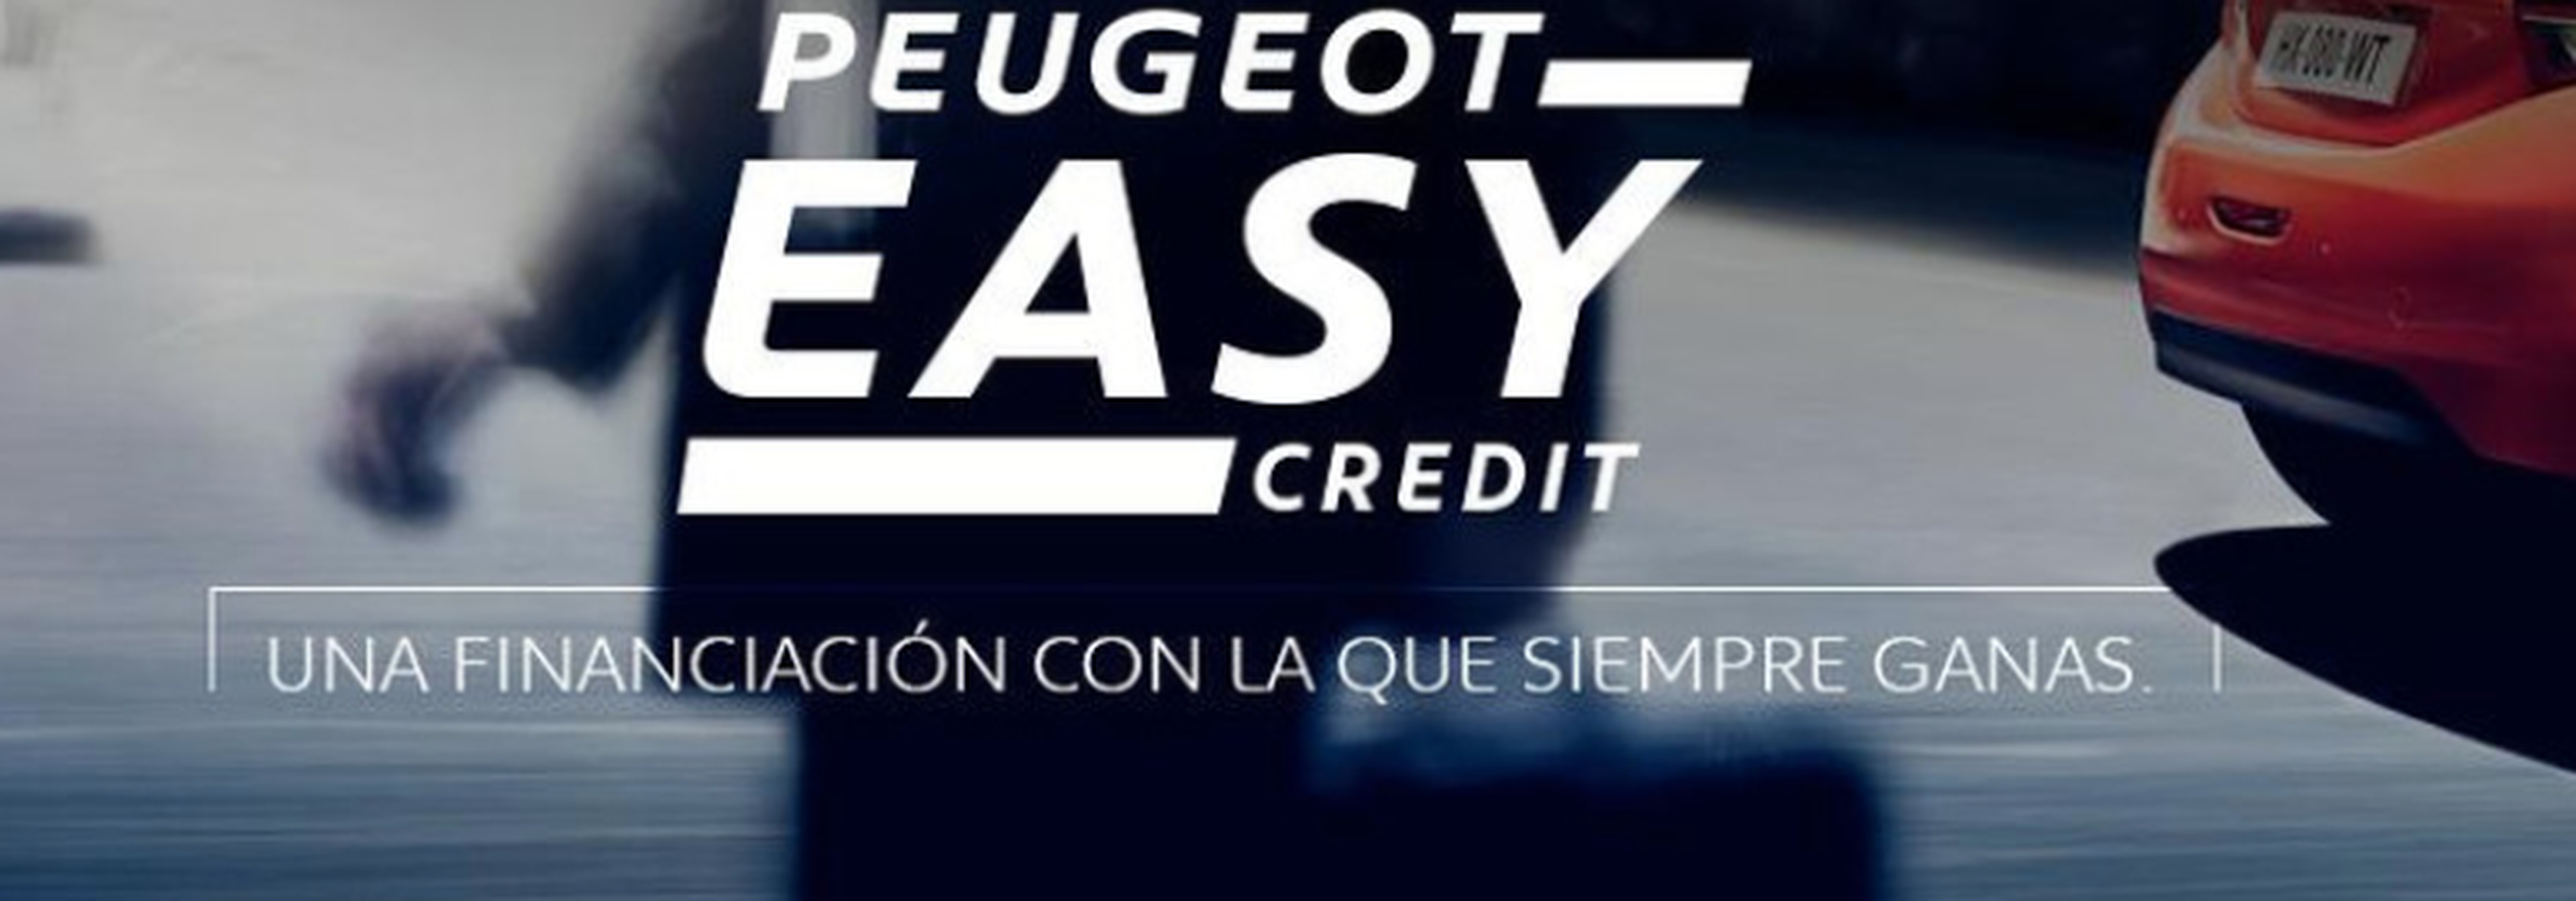 Peugeot Easy Credit